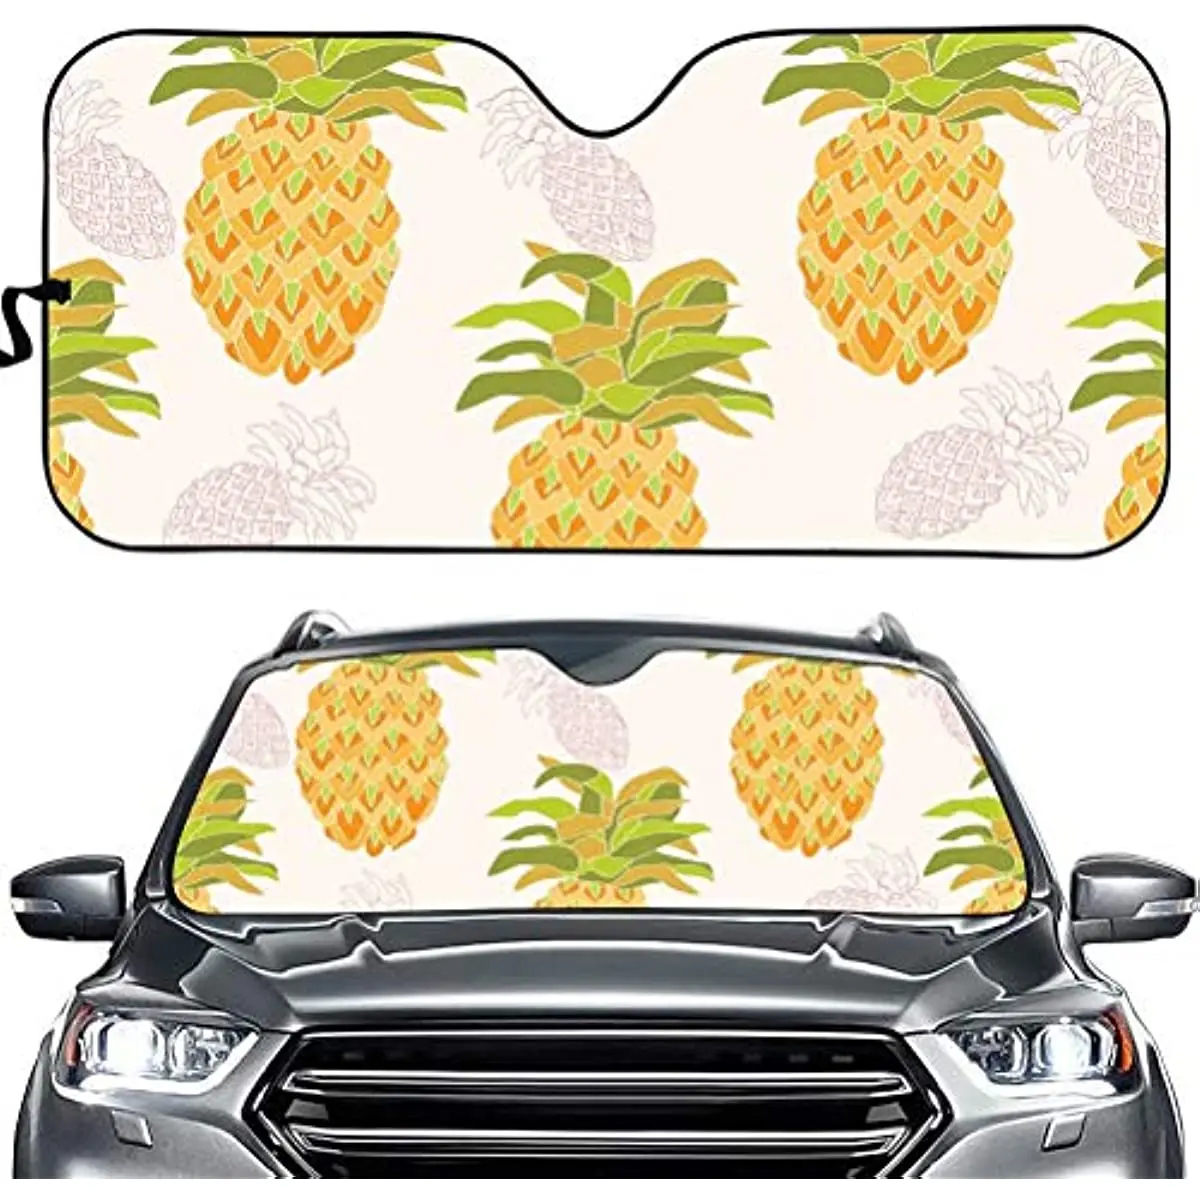 

Windshield Sunshade Cute Universal Foldable Personalized Auto Car Sun Shade UV Protection for Car SUV Trucks Pineapple